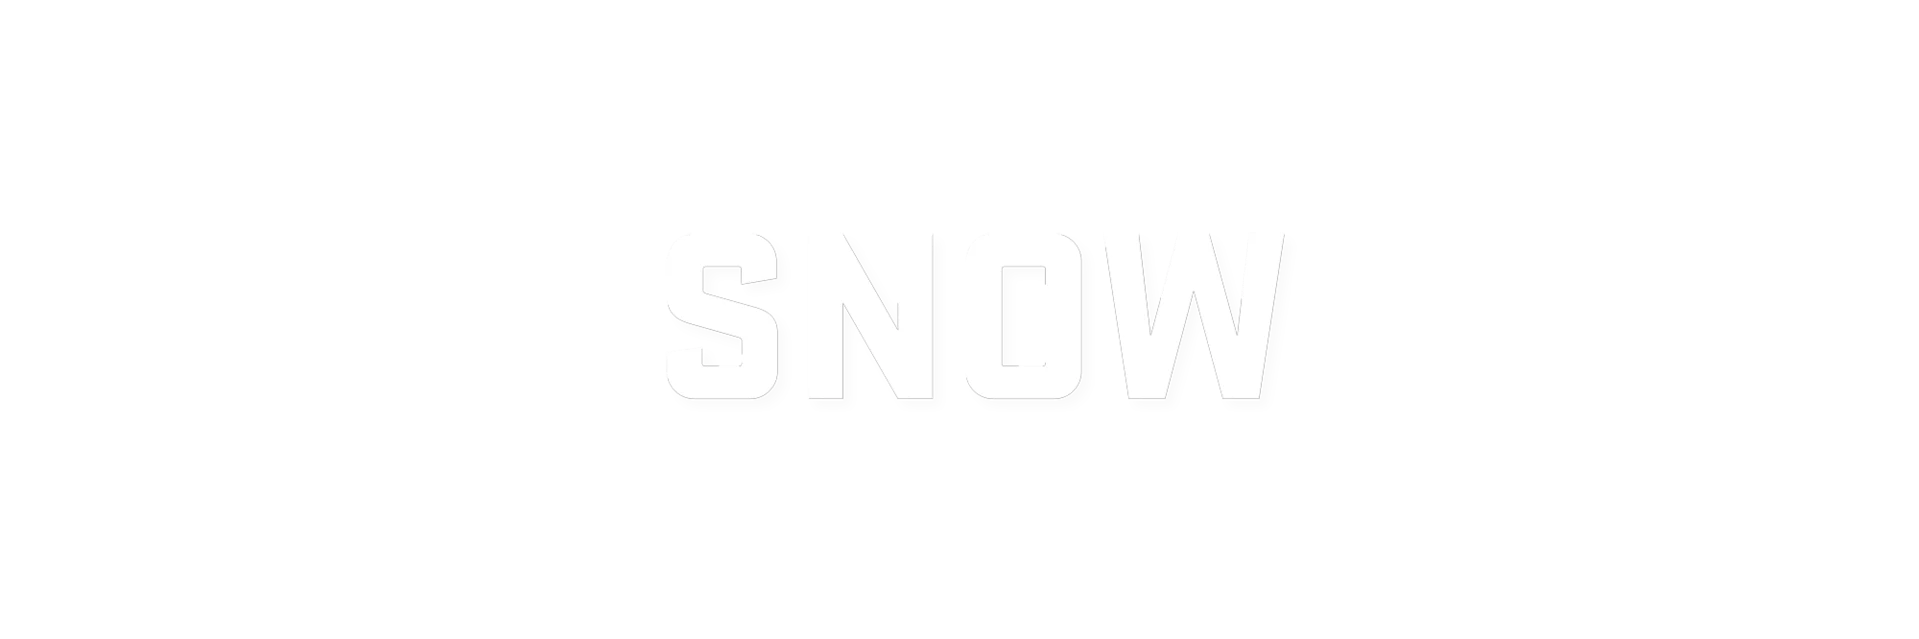 Women's Snow Sports  Header Image Text Overlay